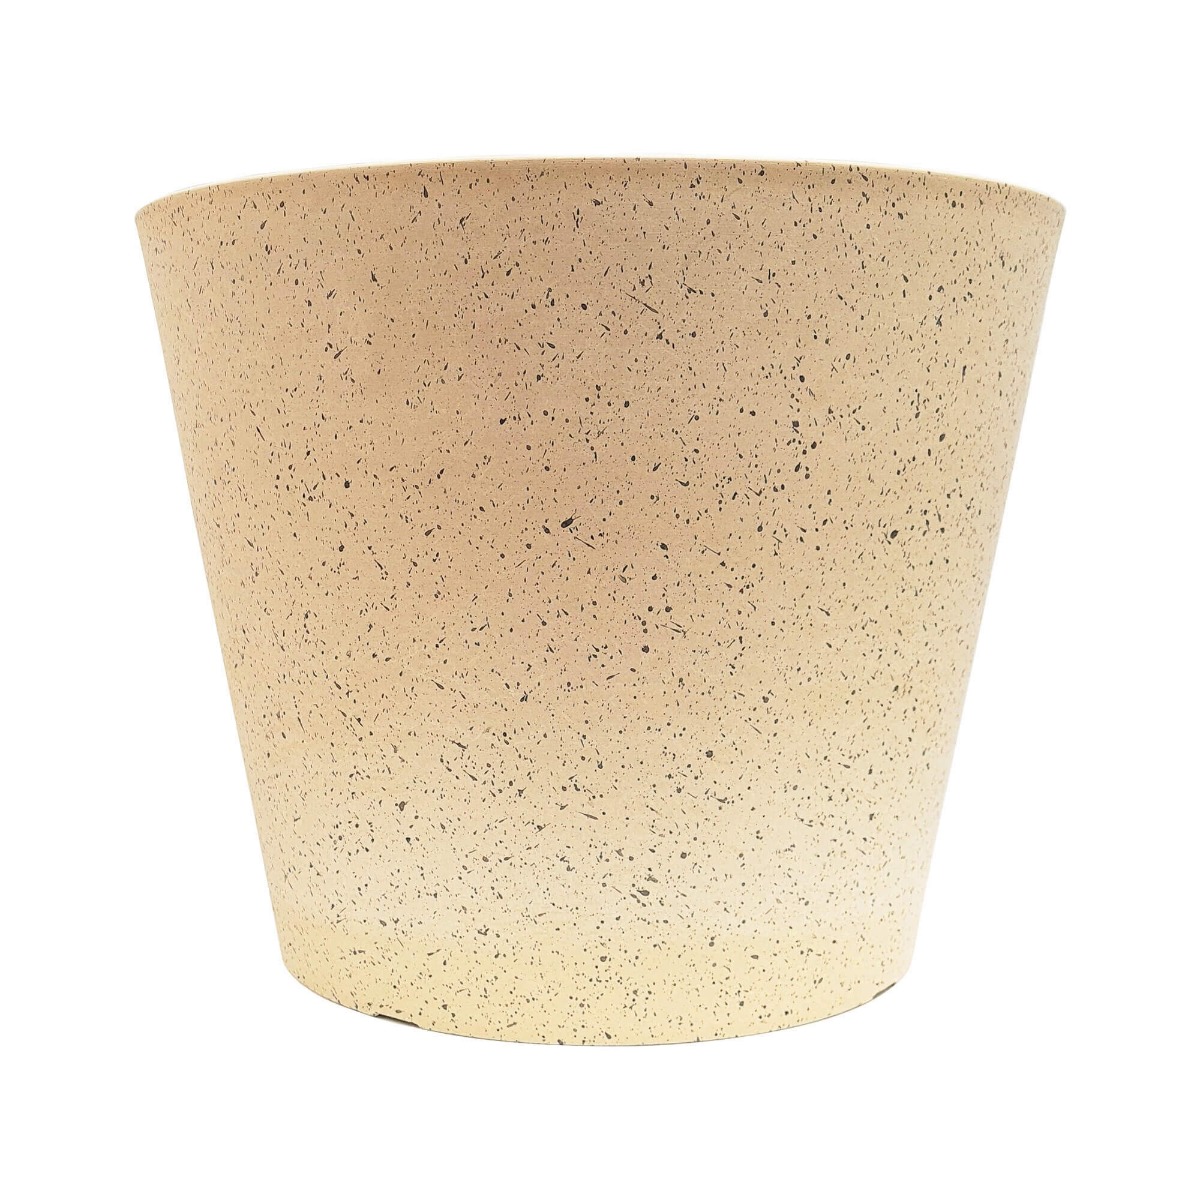 Imitation Stone Pot – 40 cm, White and Cream